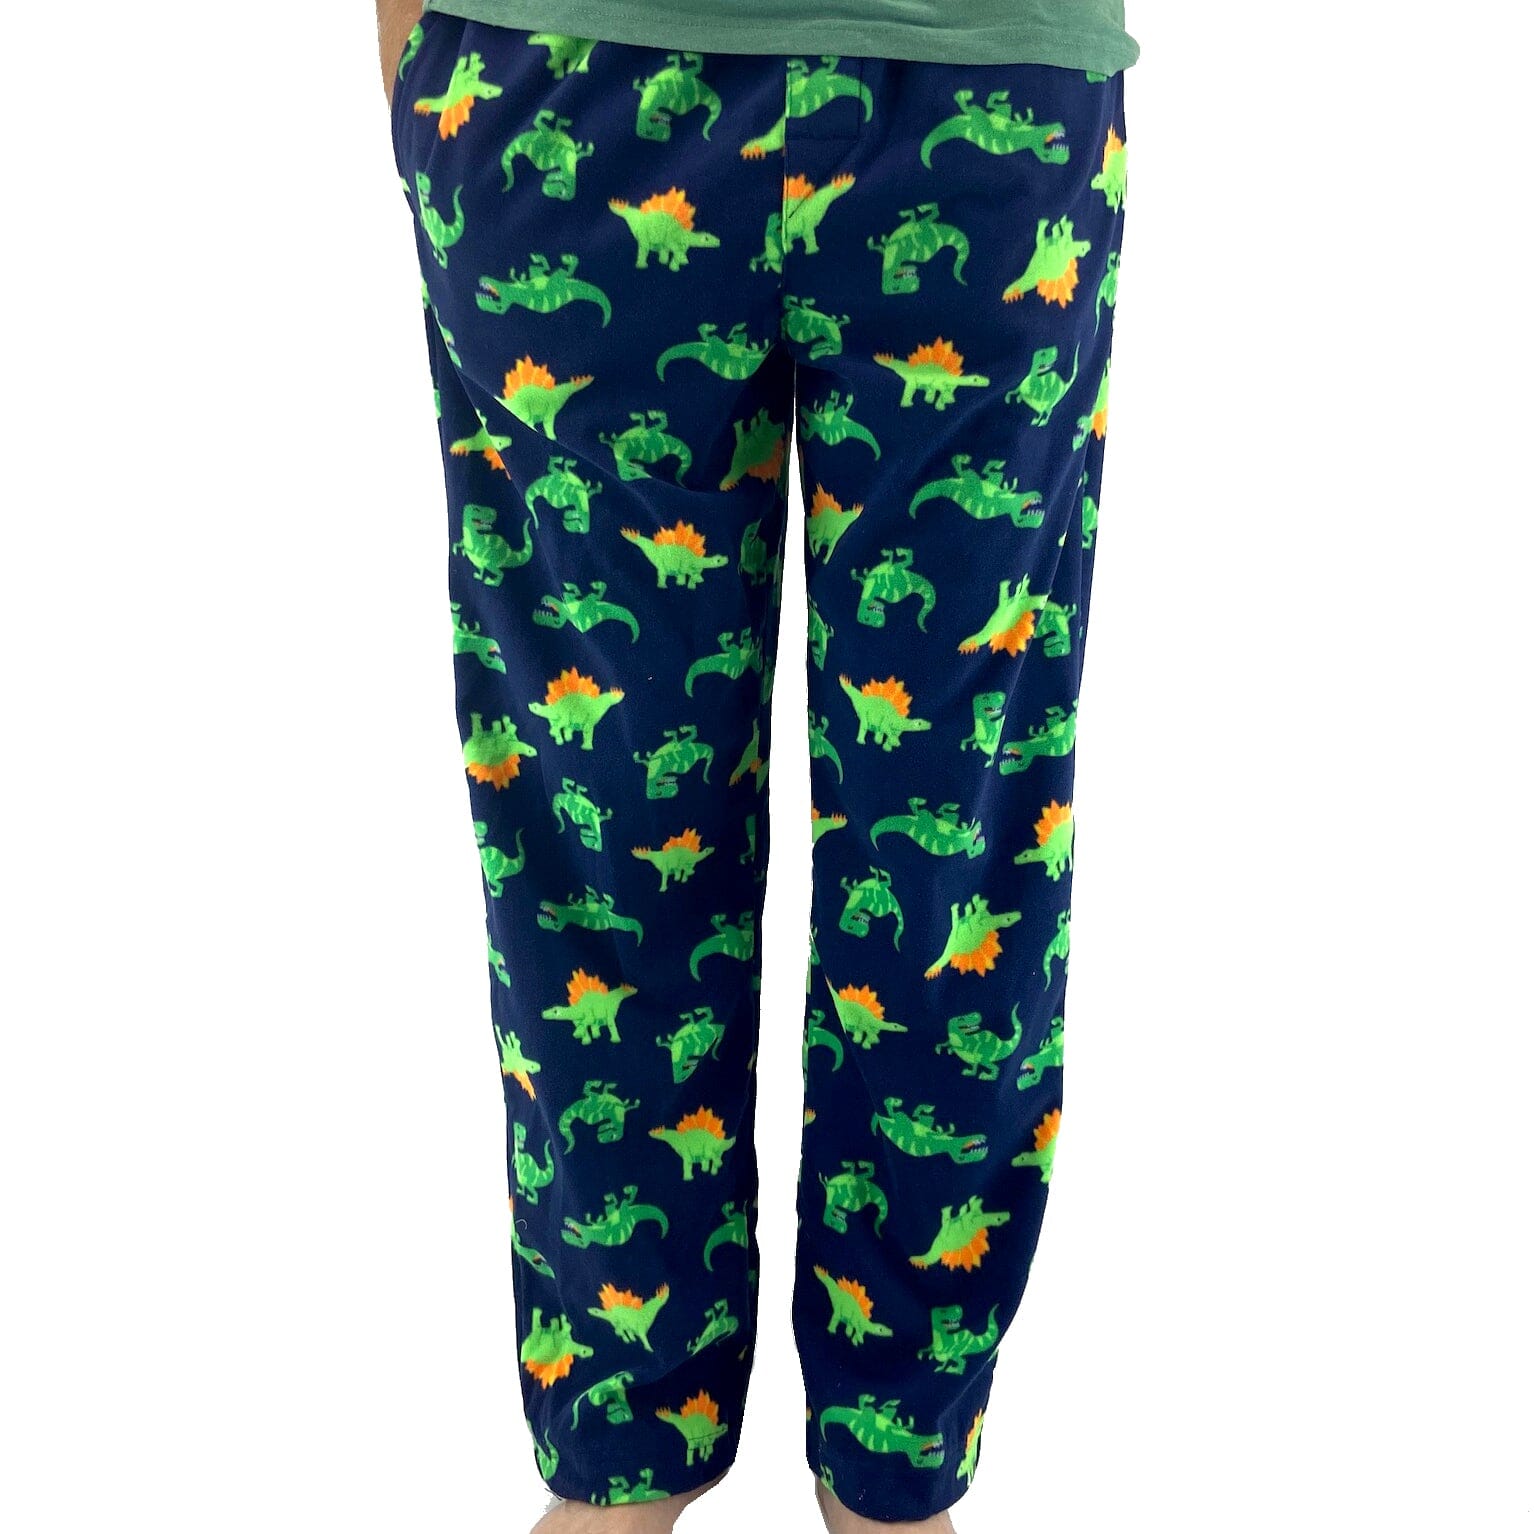 Cute Dinosaurs Blue Pajama Pants for Women Sleep Shorts with